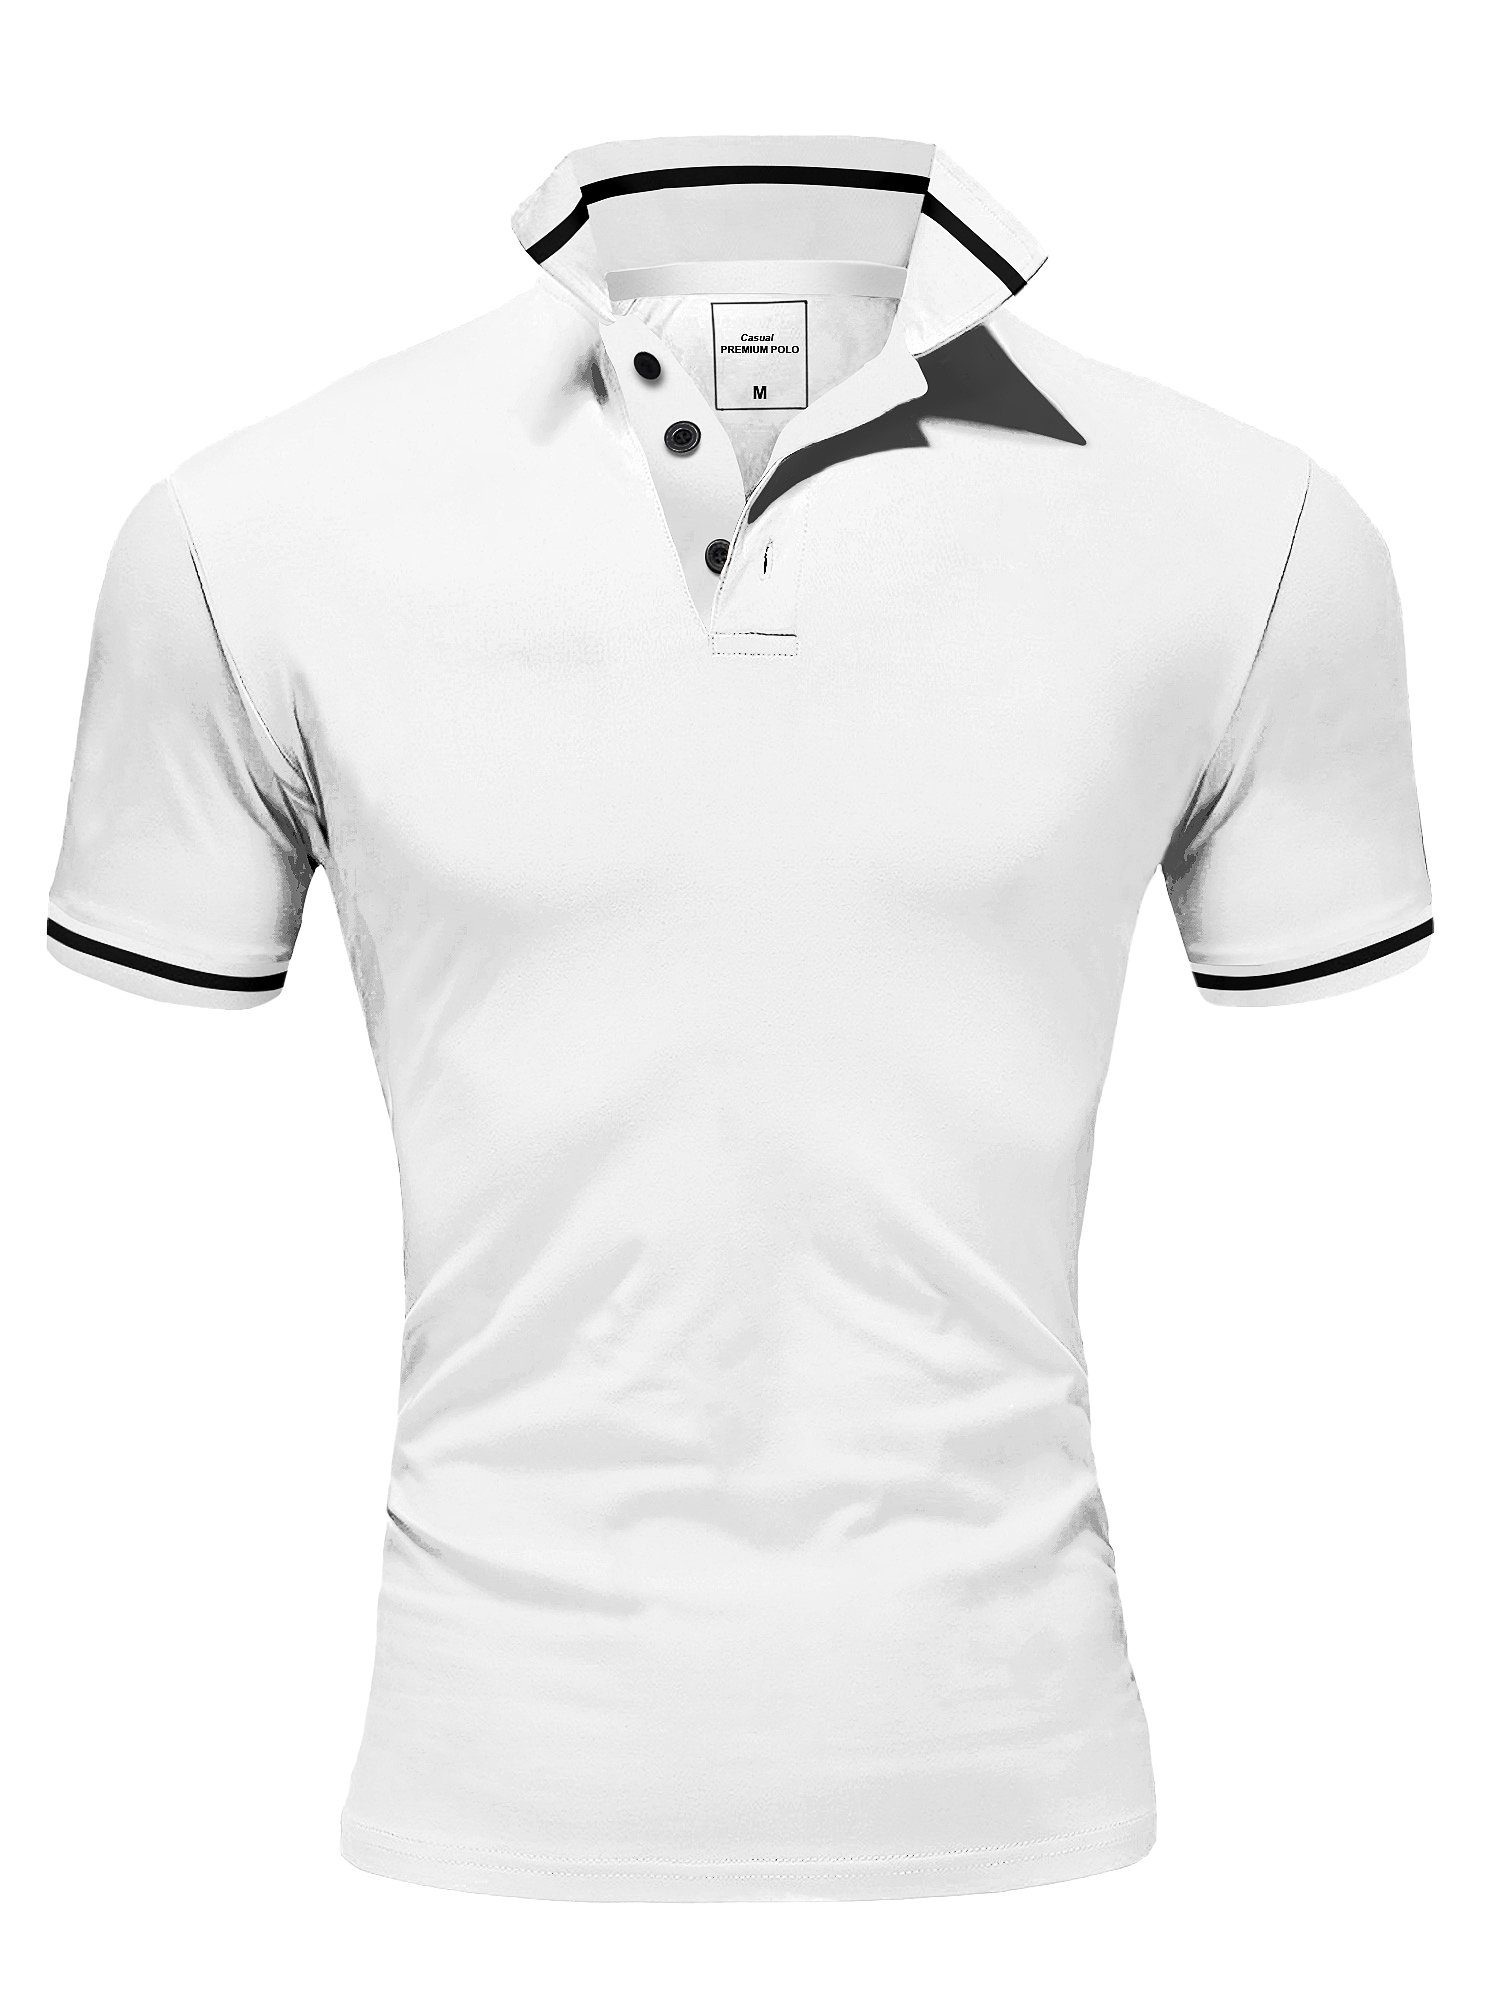 Weiß/Schwarz T-Shirt Poloshirt Herren PROVIDENCE Polohemd Kurzarm Basic Kontrast Amaci&Sons